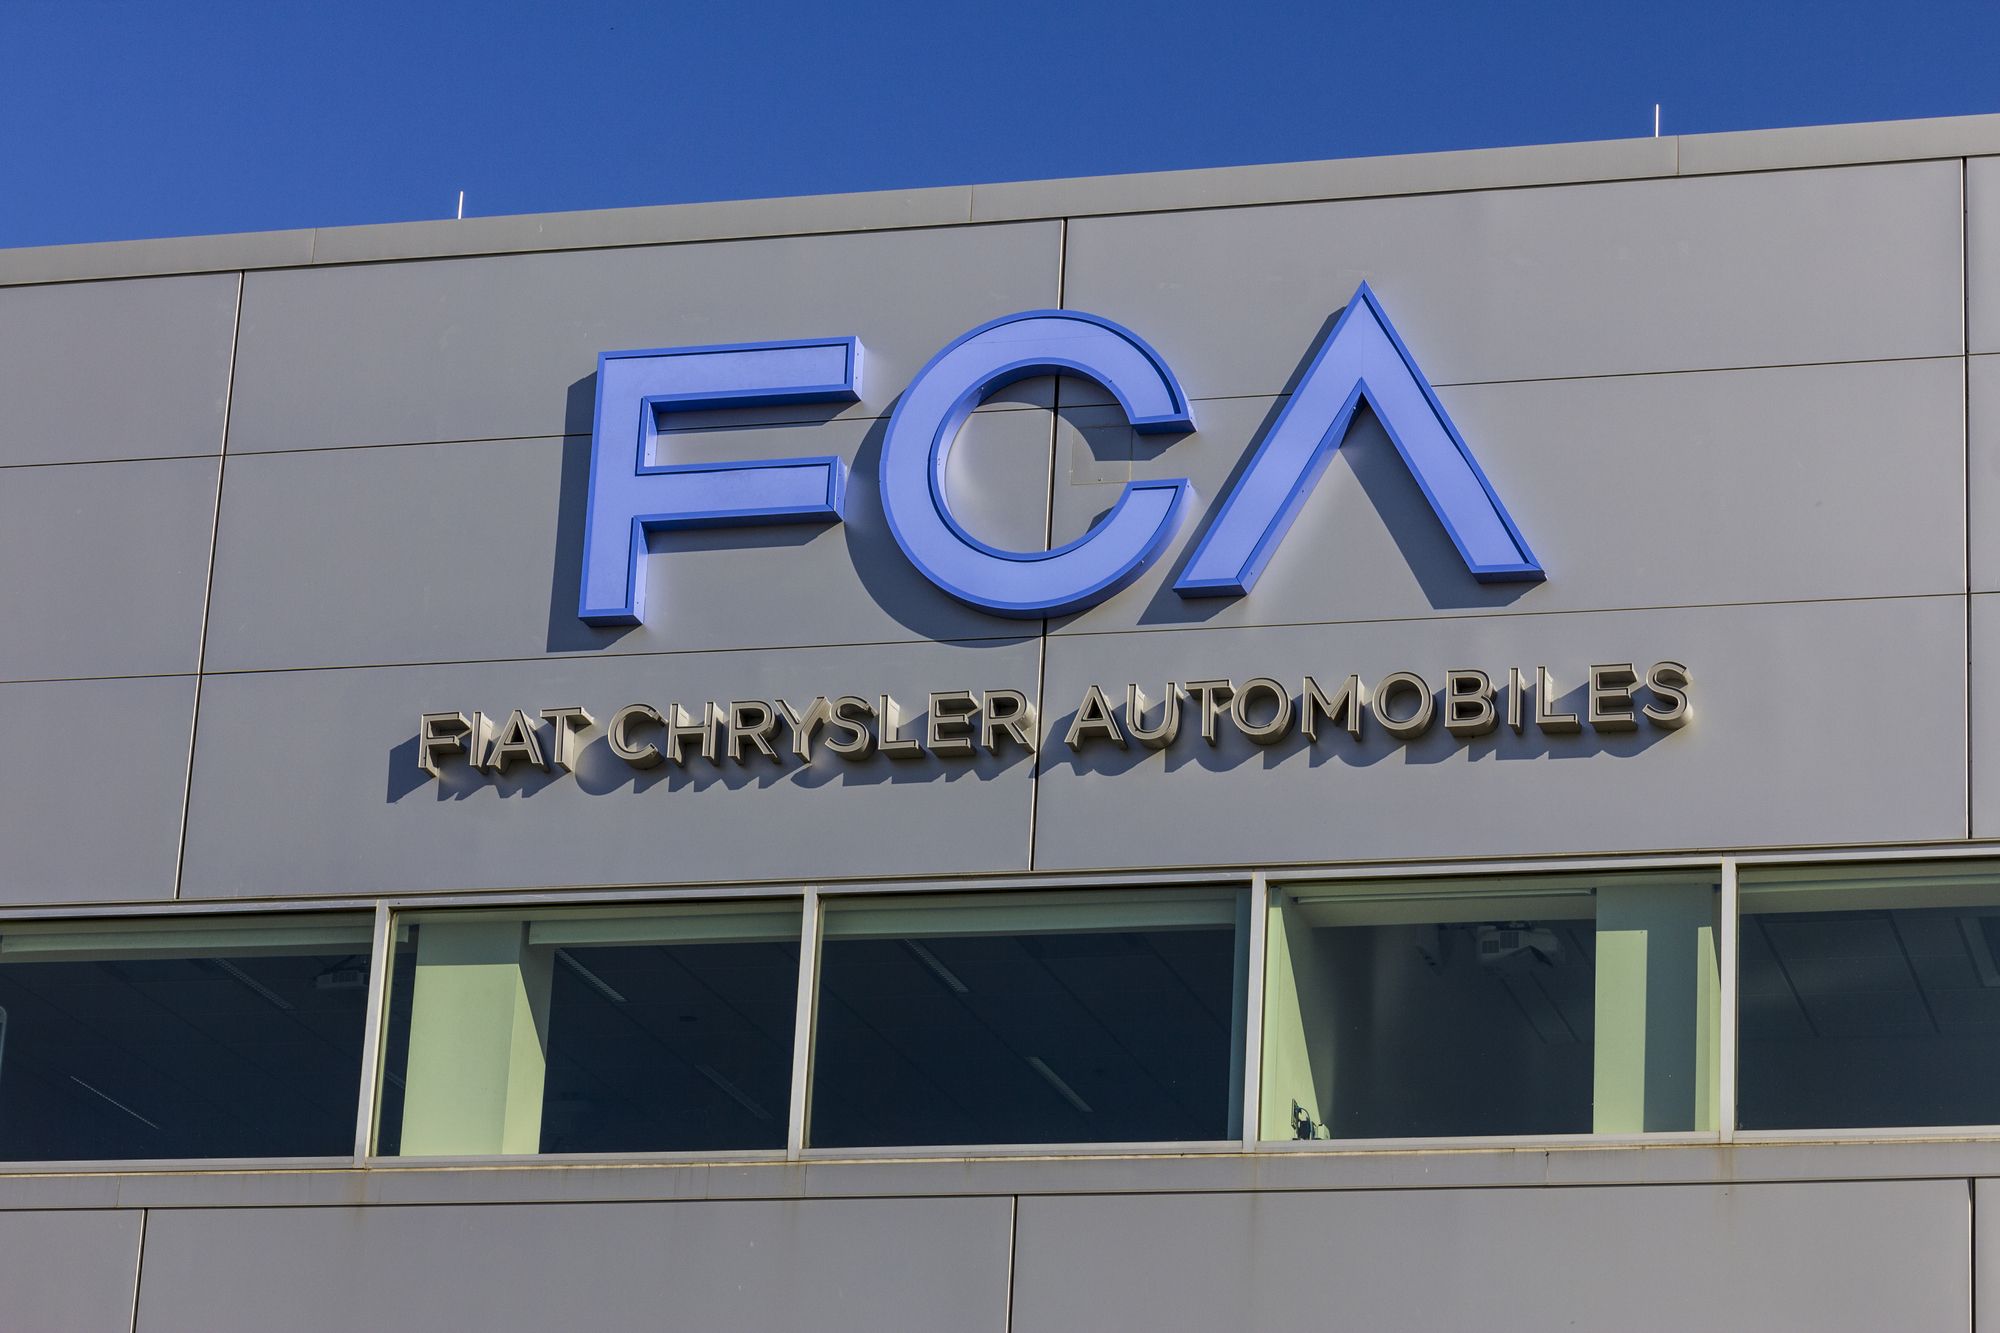 Tipton - Circa November 2016: FCA Fiat Chrysler Automobiles Transmission Plant. FCA sells vehicles under the Chrysler, Dodge, and Jeep brands I